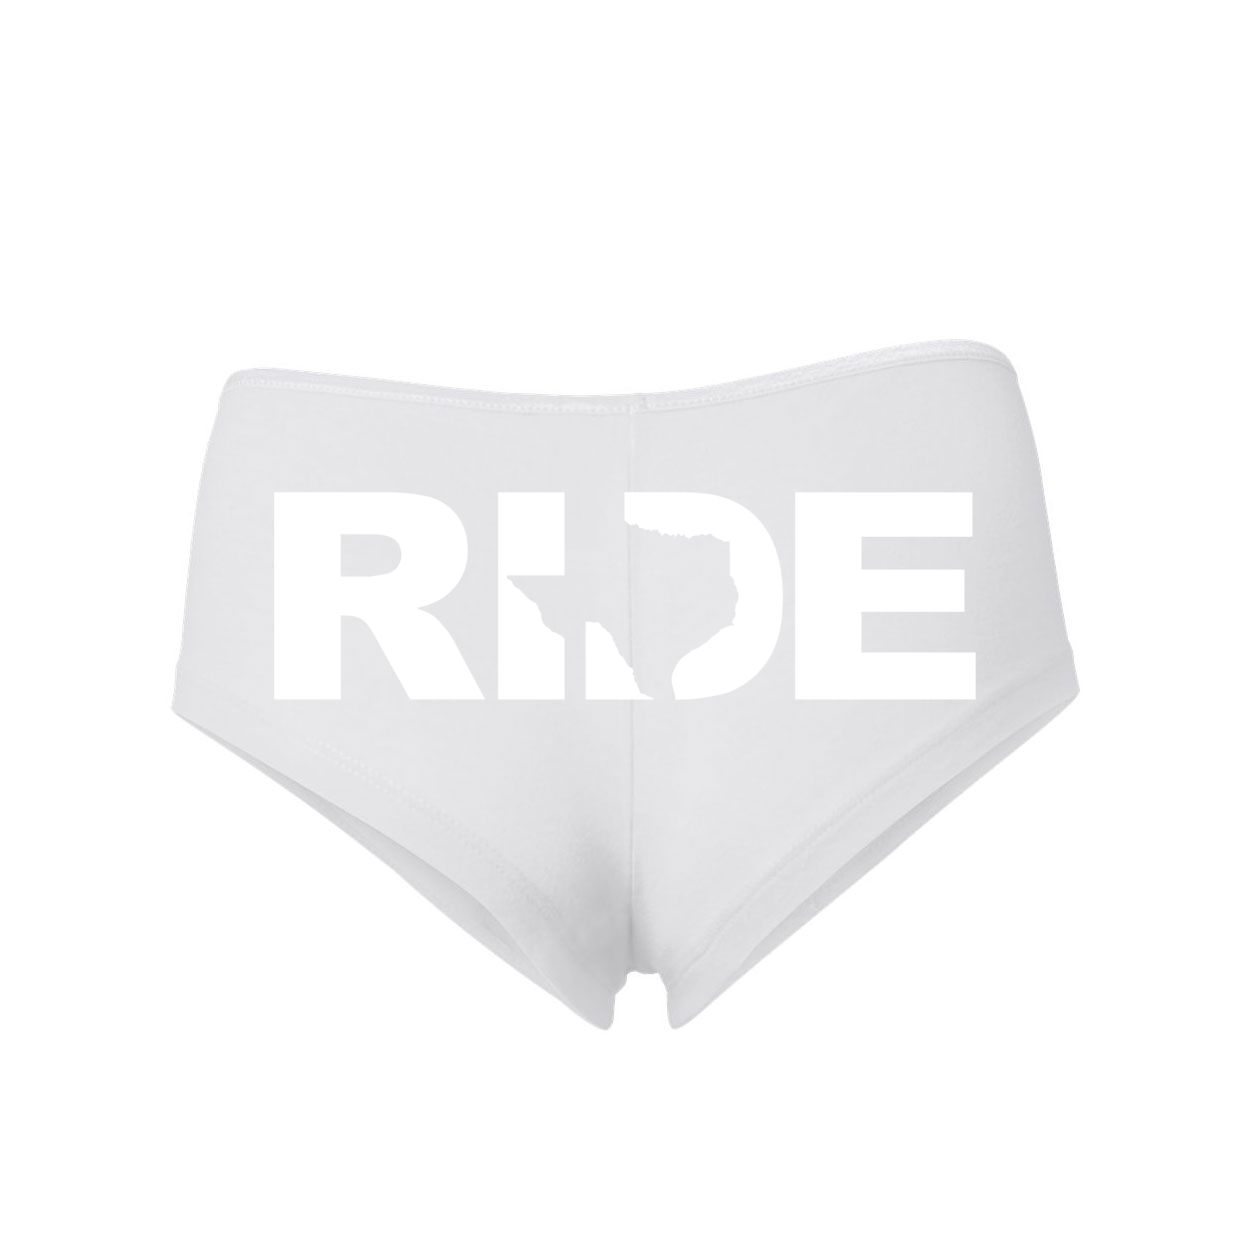 Ride Texas Classic Women's Booty Shorts White (White Logo)